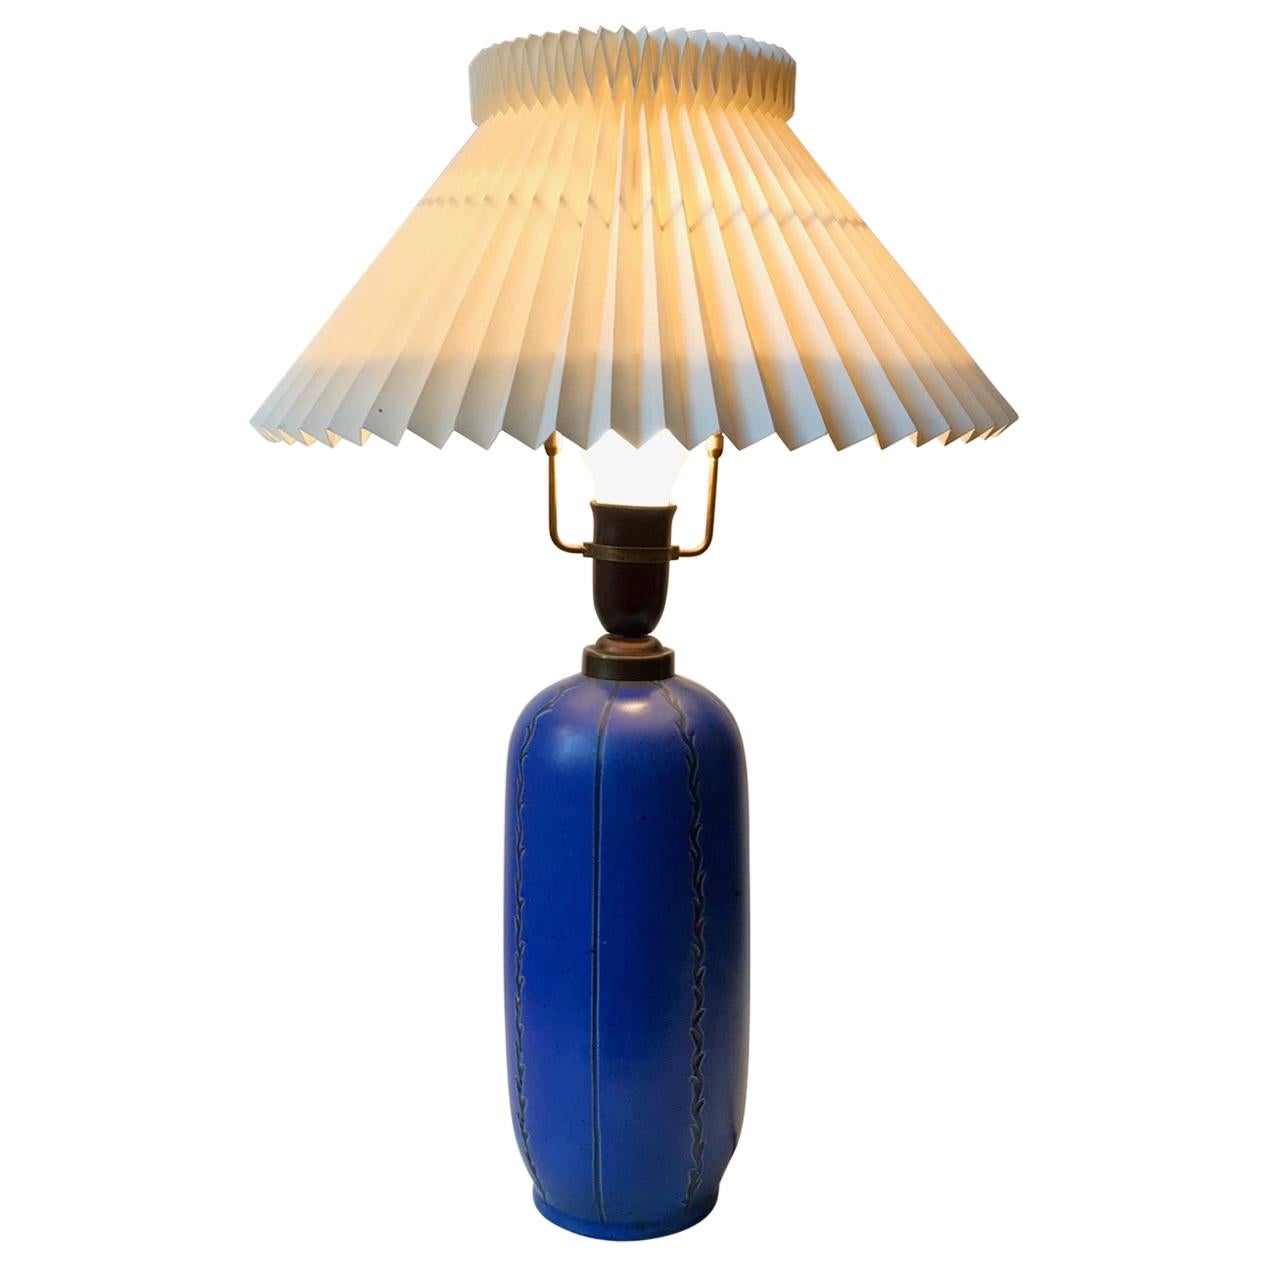 Blue Ceramic Art Deco Table Lamp by Søholm, Denmark, circa 1940